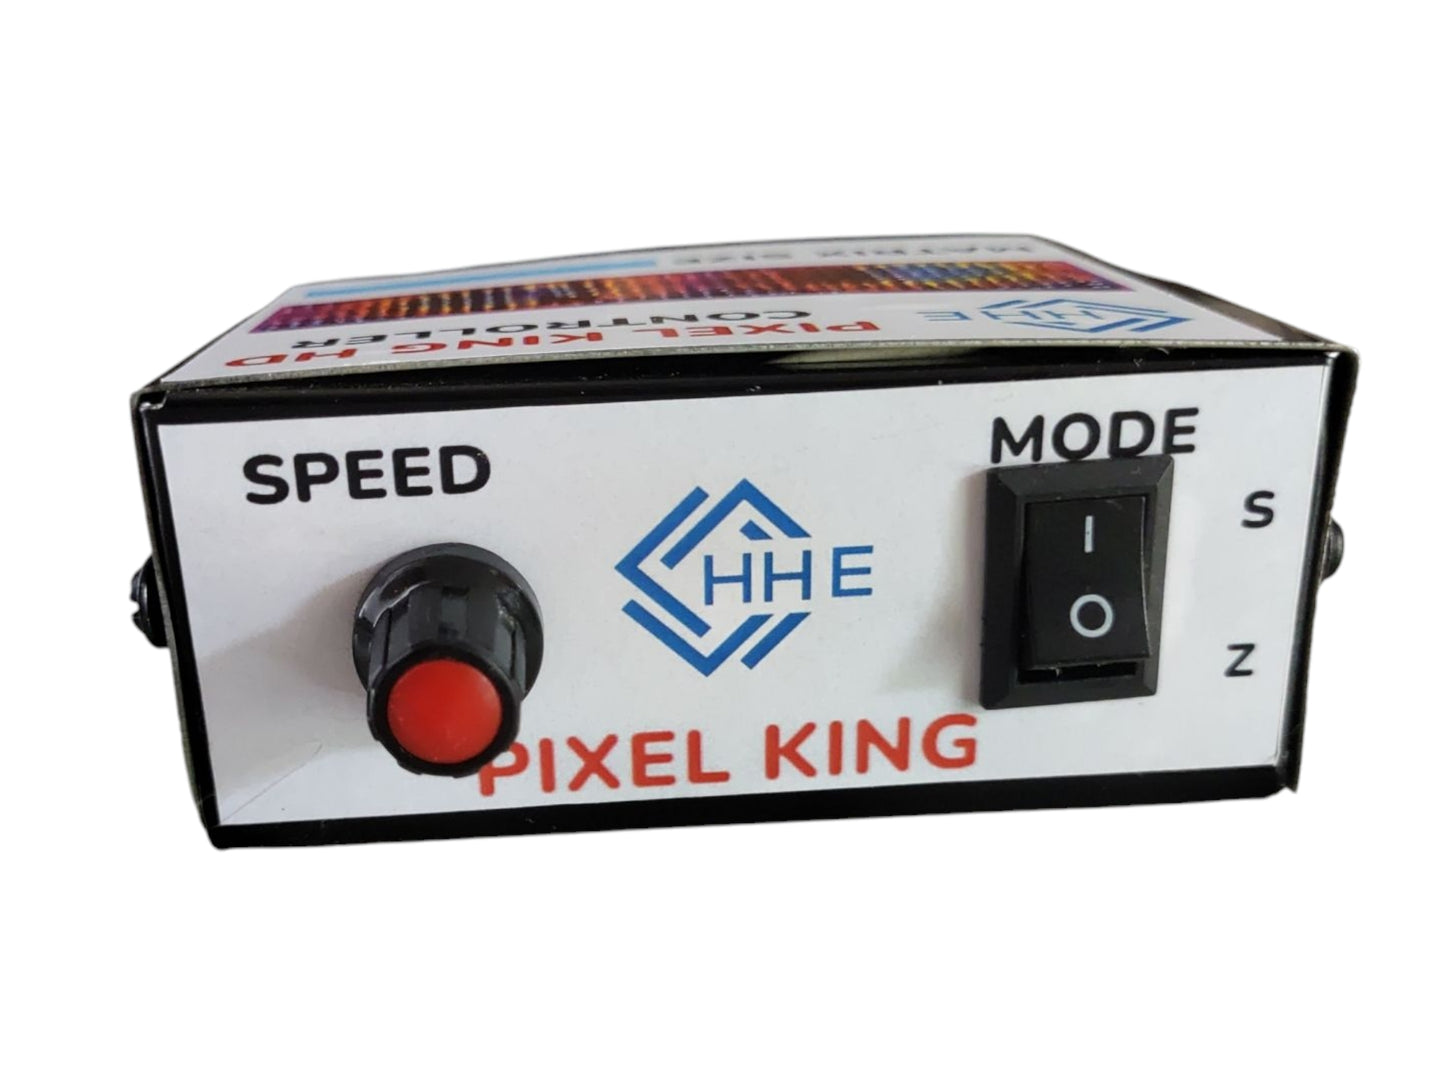 "PIXEL KING"  HD Controller